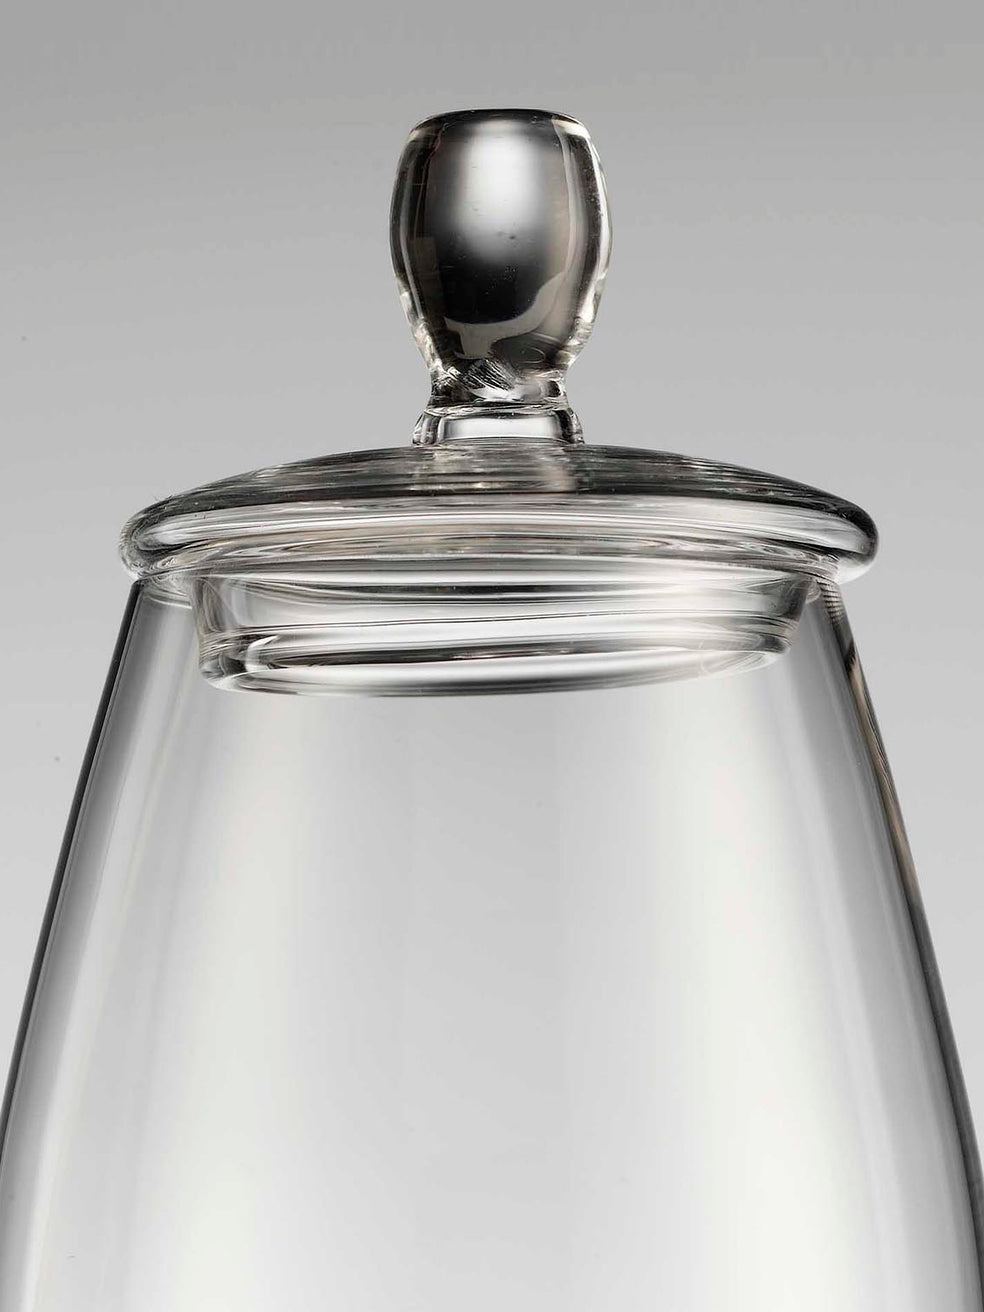 Tasting Cap for Copita Glass by Glencairn Crystal